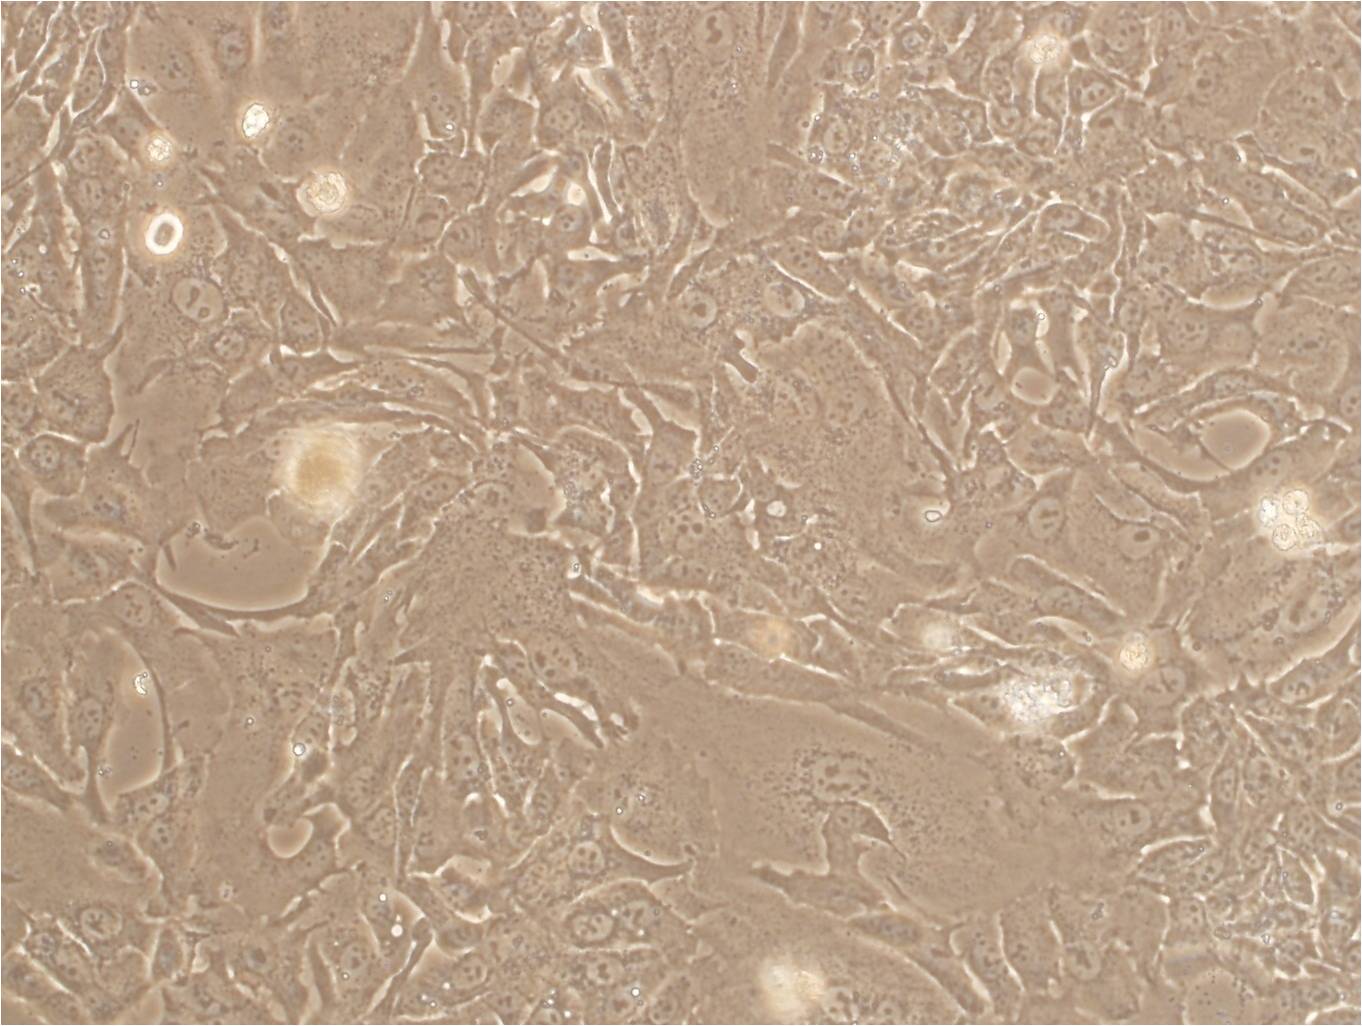 FL 62891 epithelioid cells人肝细胞系,FL 62891 epithelioid cells